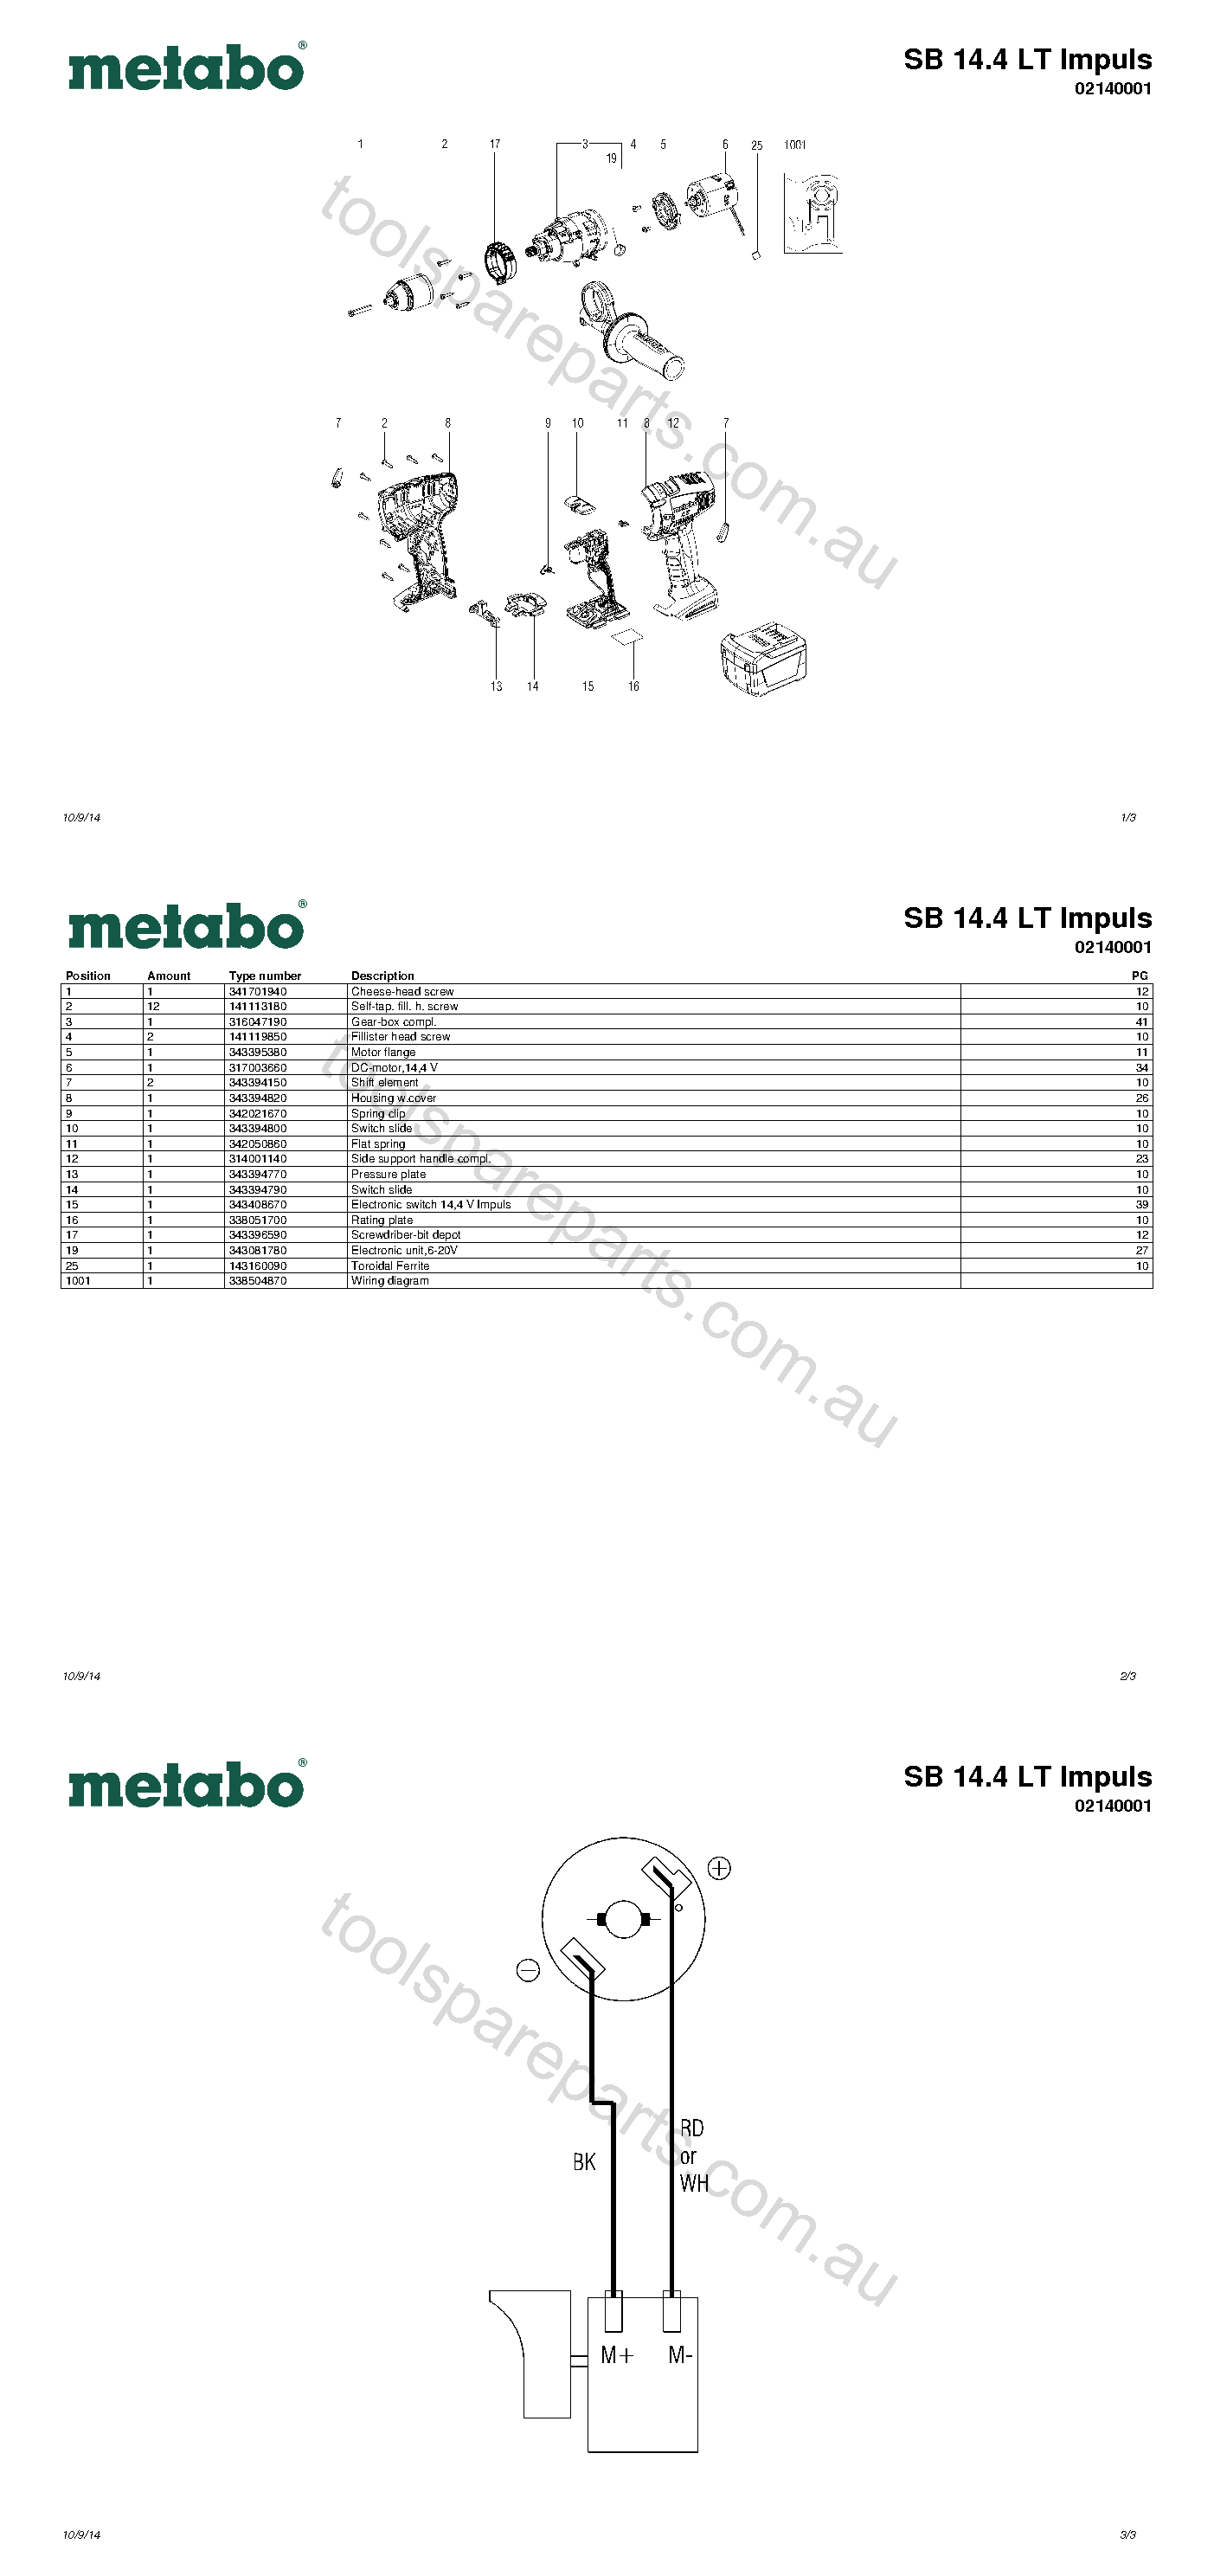 Metabo SB 14.4 LT Impuls 02140001  Diagram 1